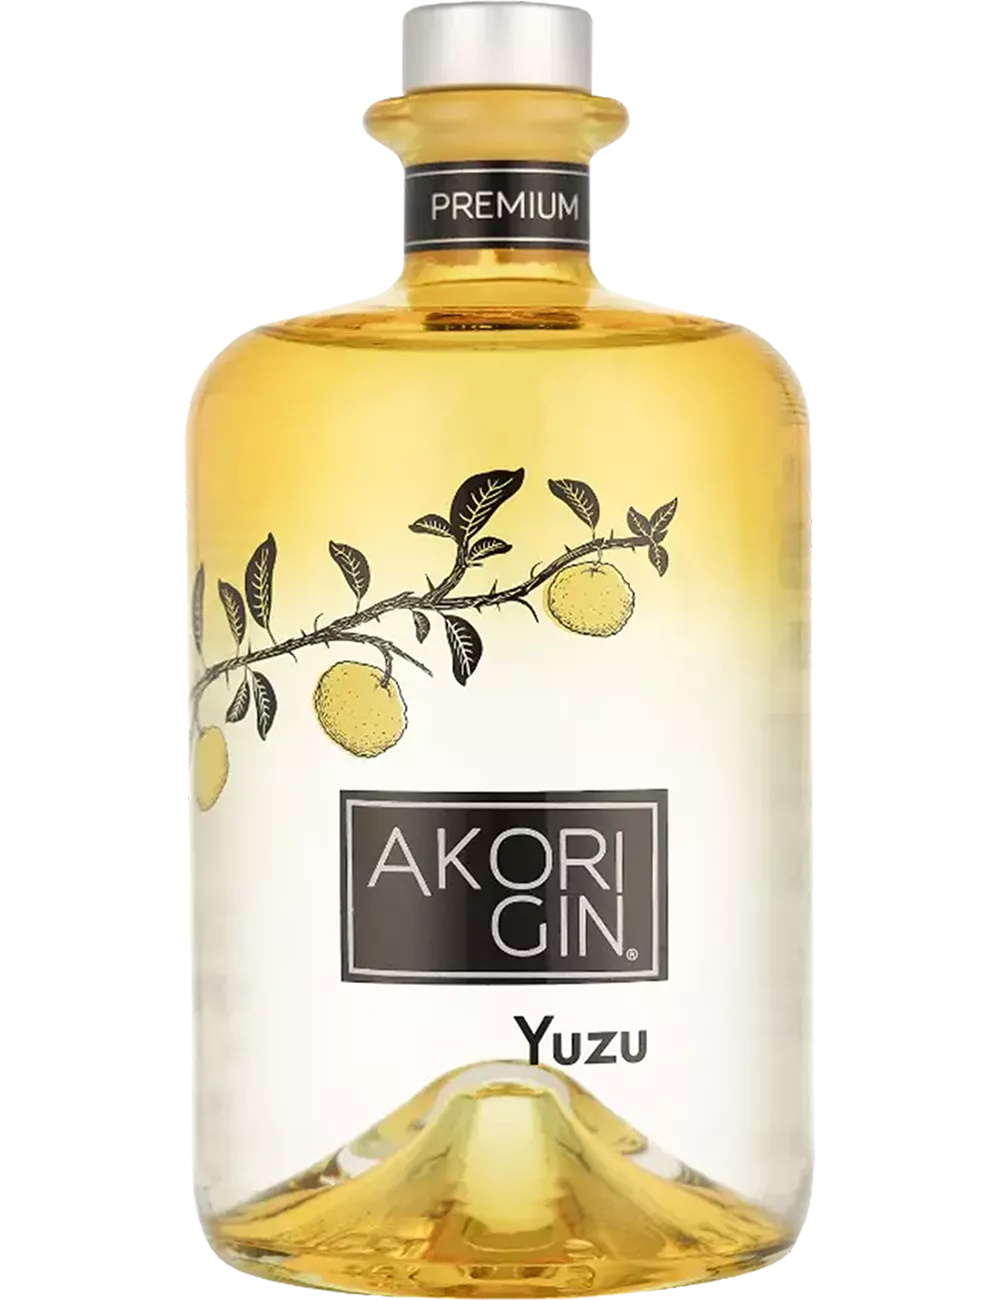 Akori - Yuzu - Distilled gin